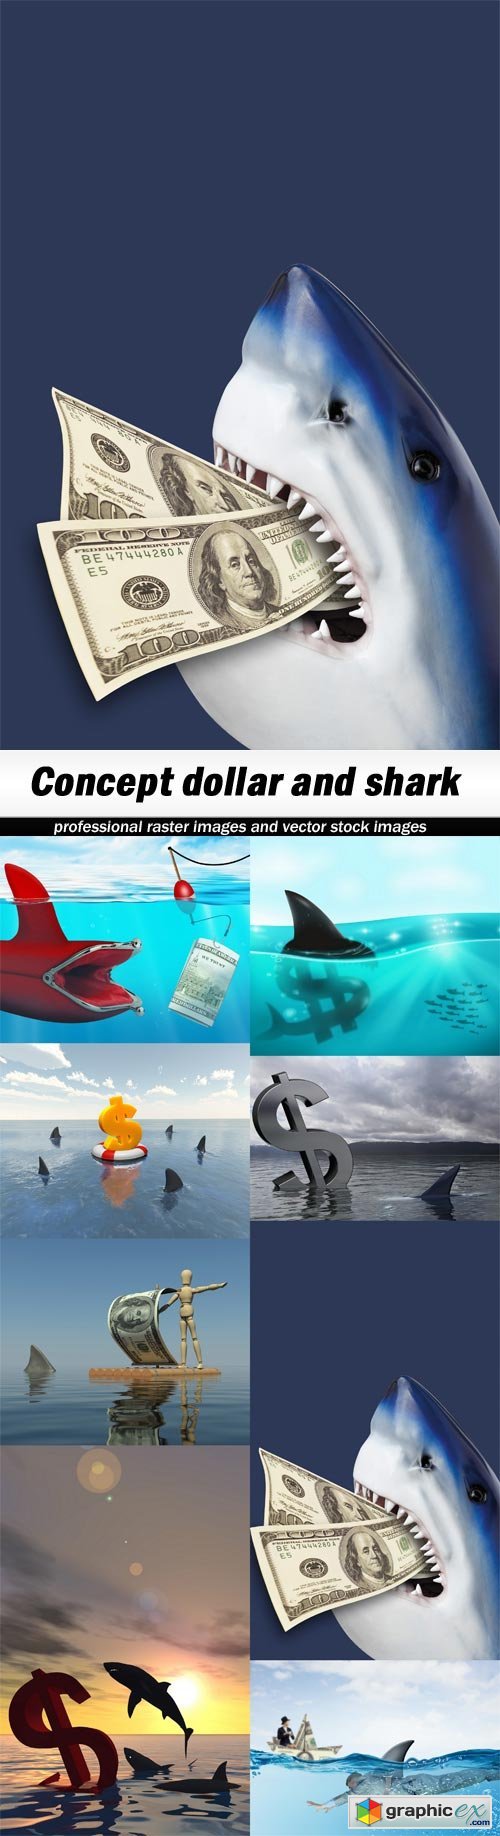 Concept dollar and shark-8xJPEGs